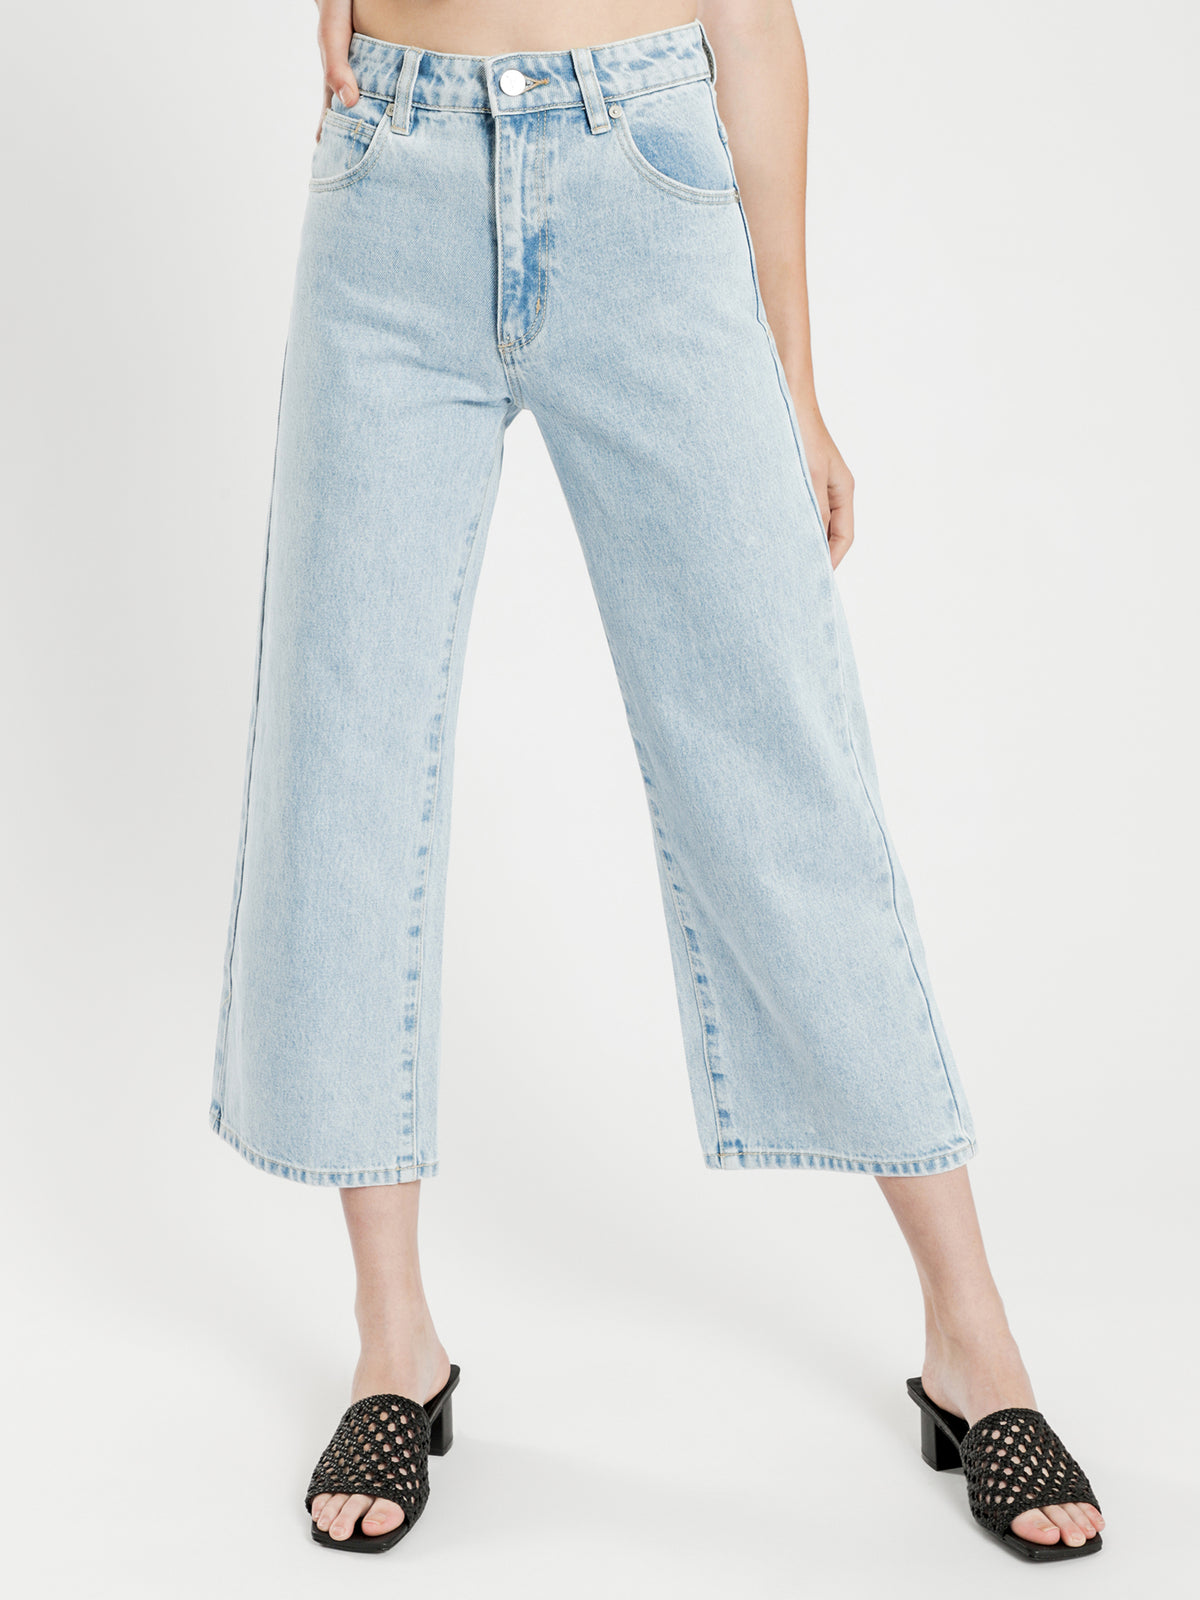 Street Aline Crop Jeans in Walk Away Blue Denim